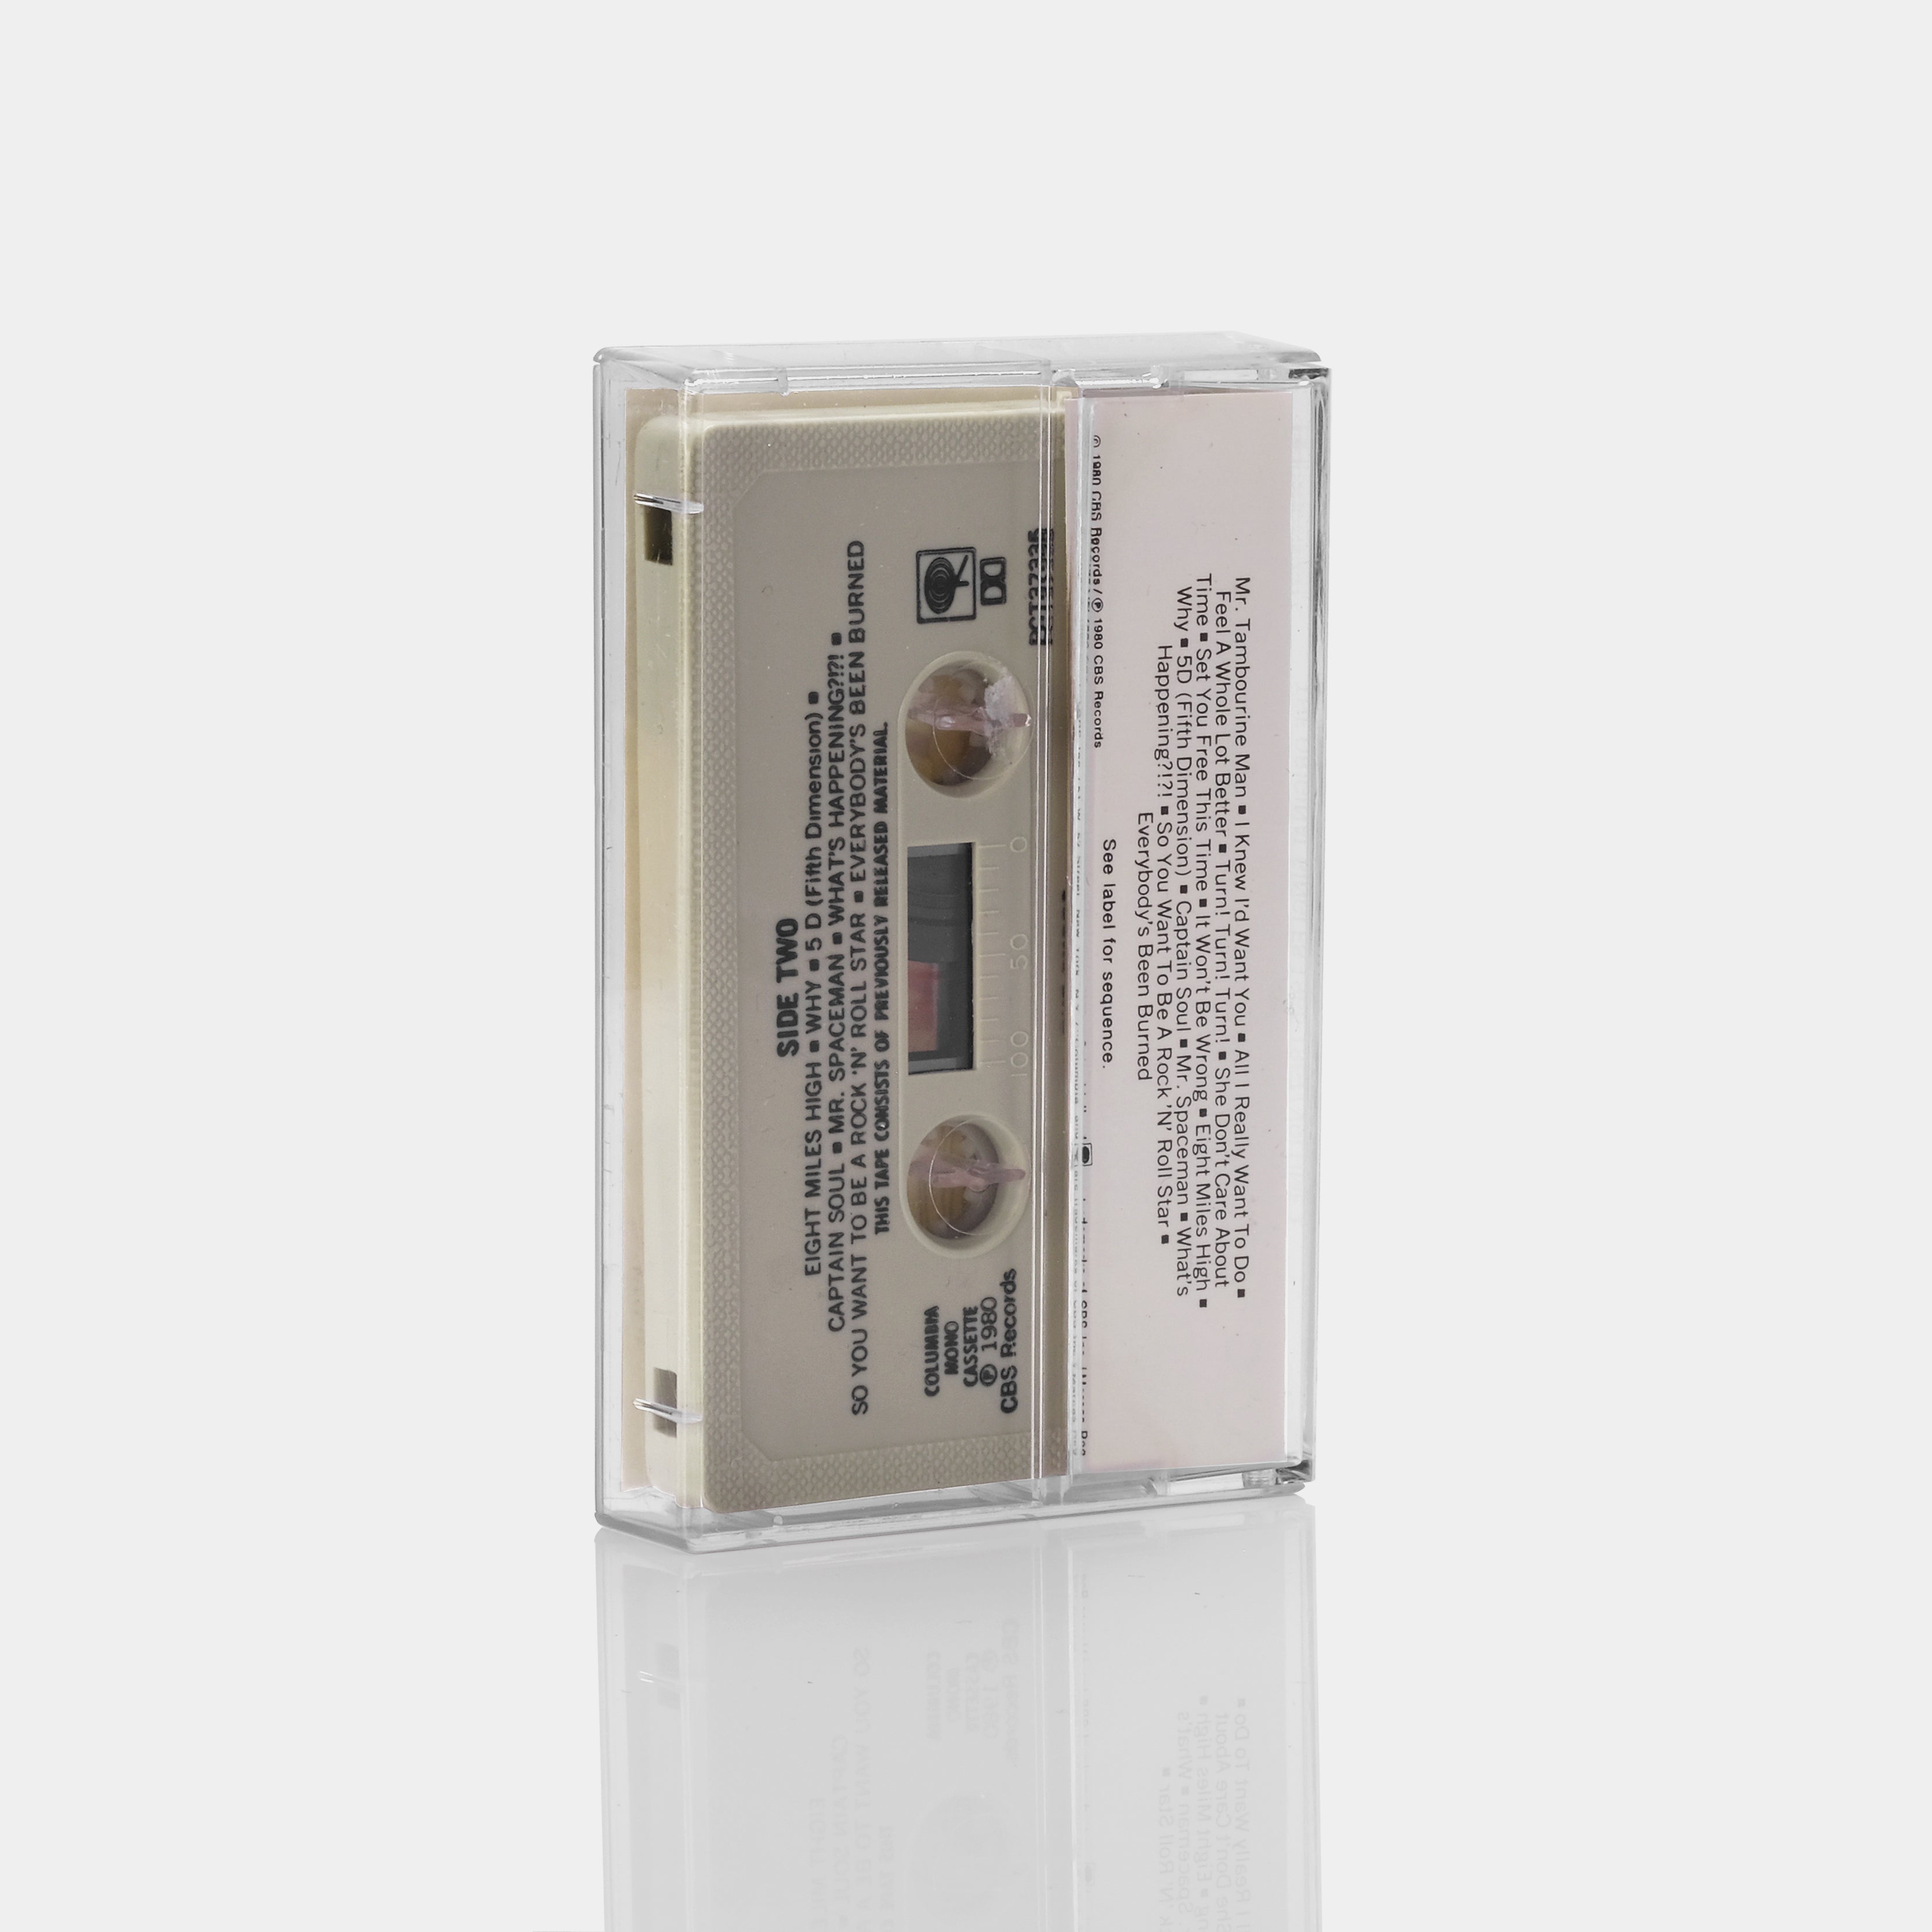 The Byrds - The Original Singles 1965-1967 Volume 1 Cassette Tape